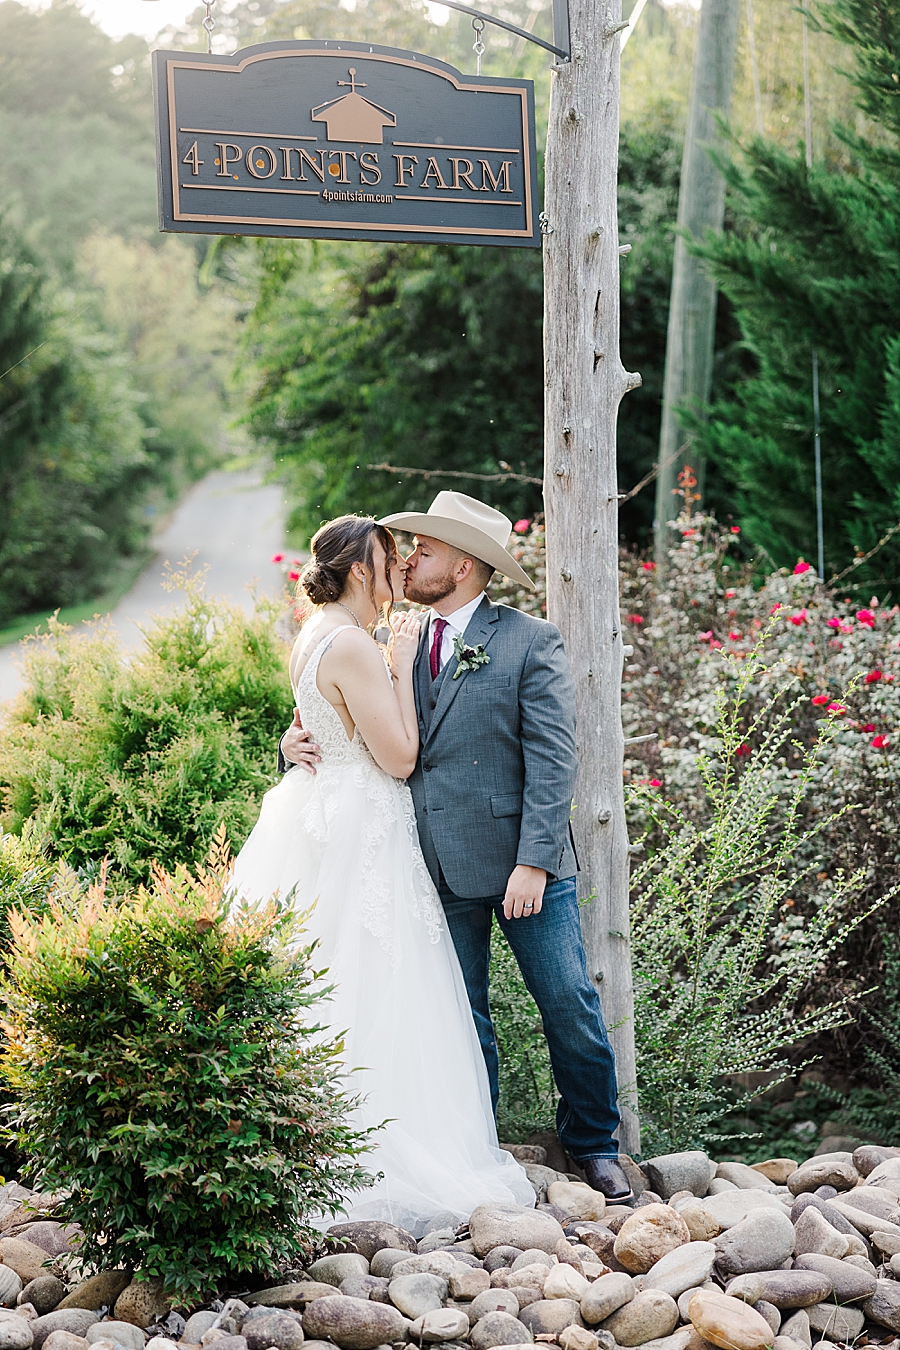 kissing under 4 points farm wedding sign